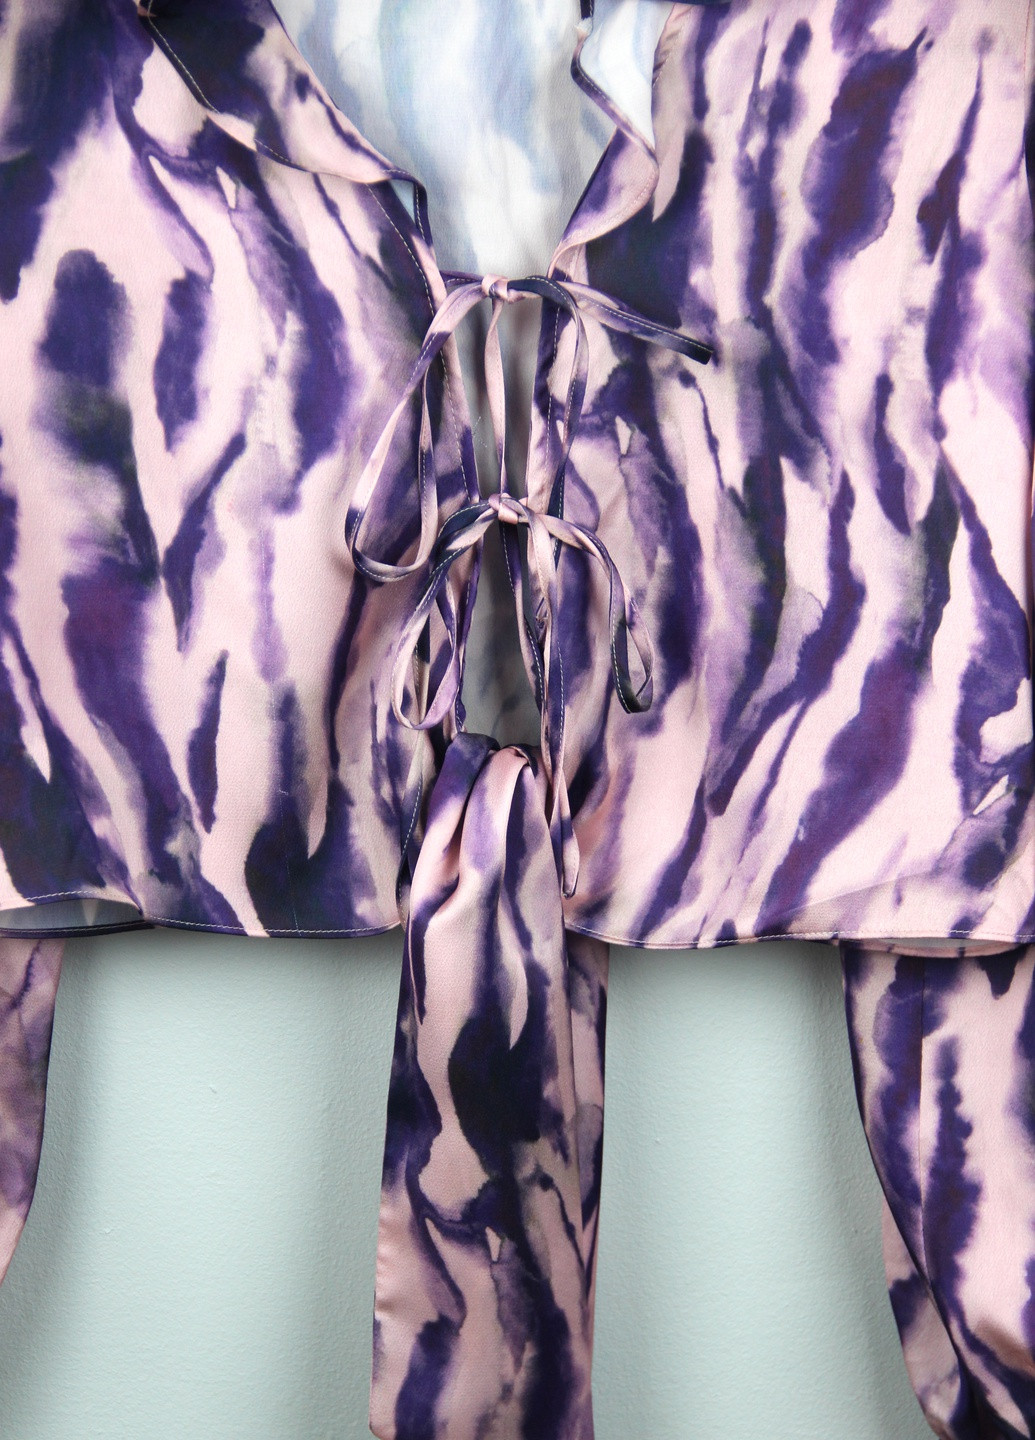 Фиолетовая блуза Topshop